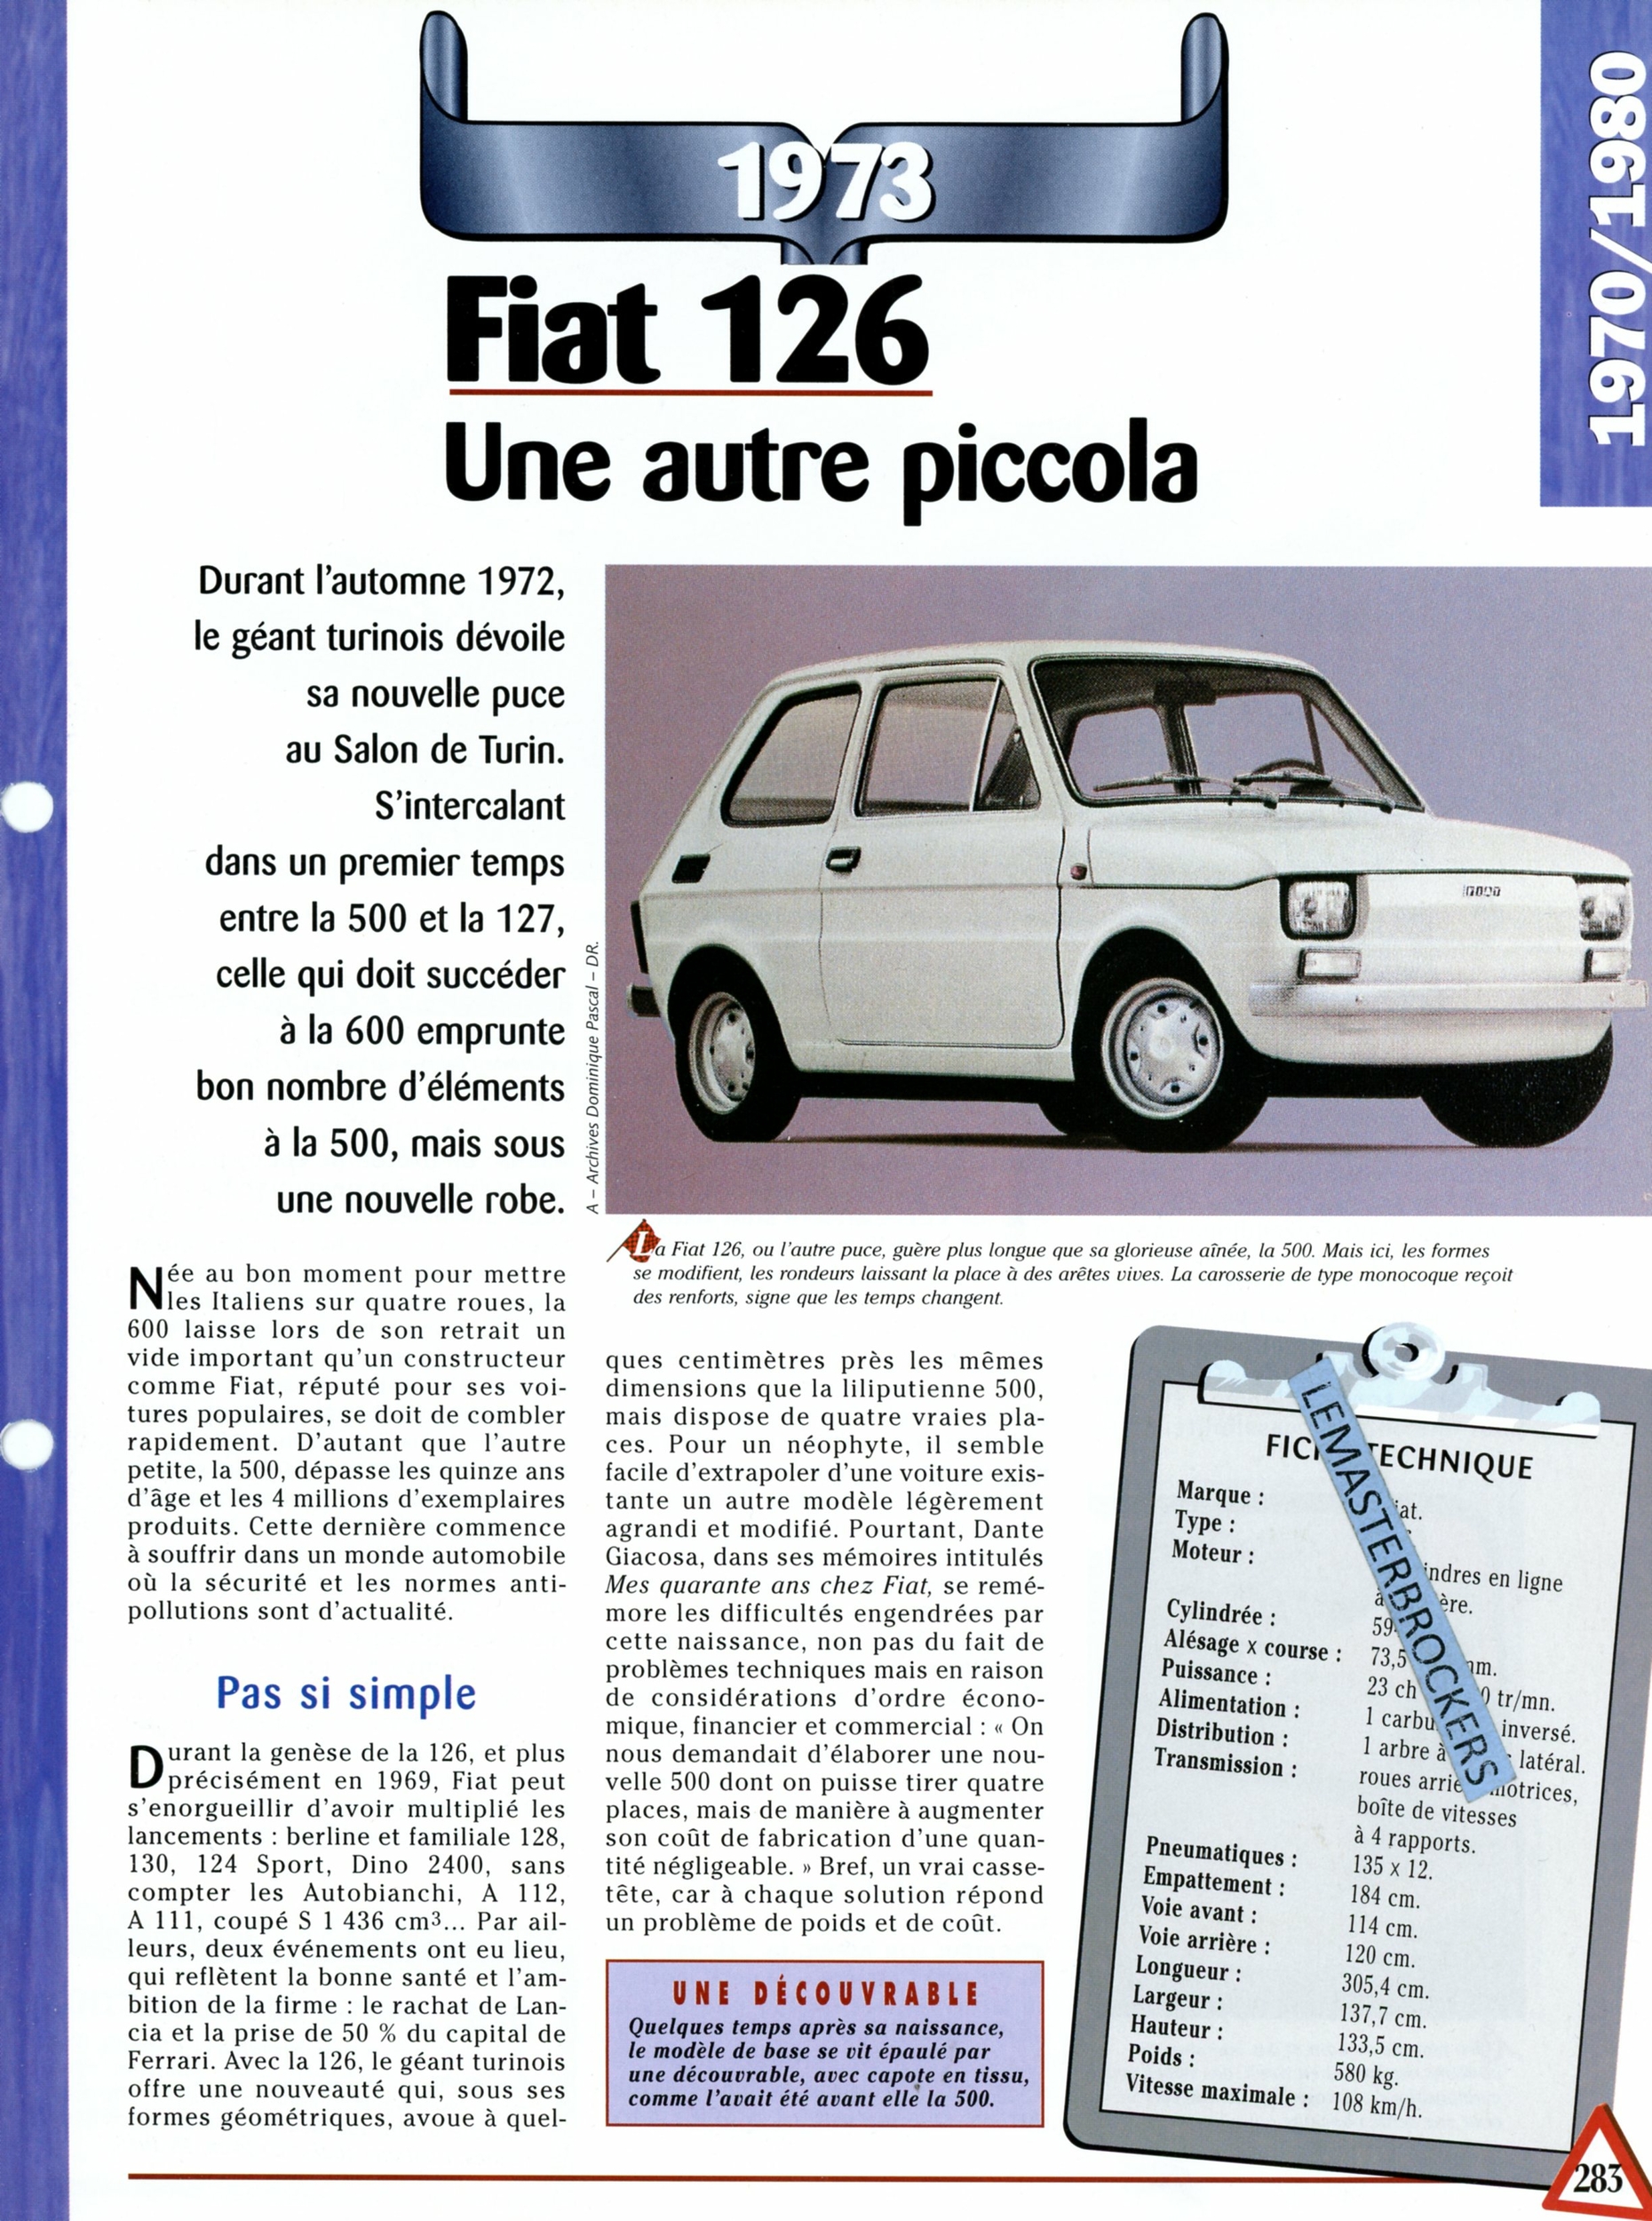 FIAT 126 1973 - FICHE AUTO COLLECTION HACHETTE - FICHE TECHNIQUE